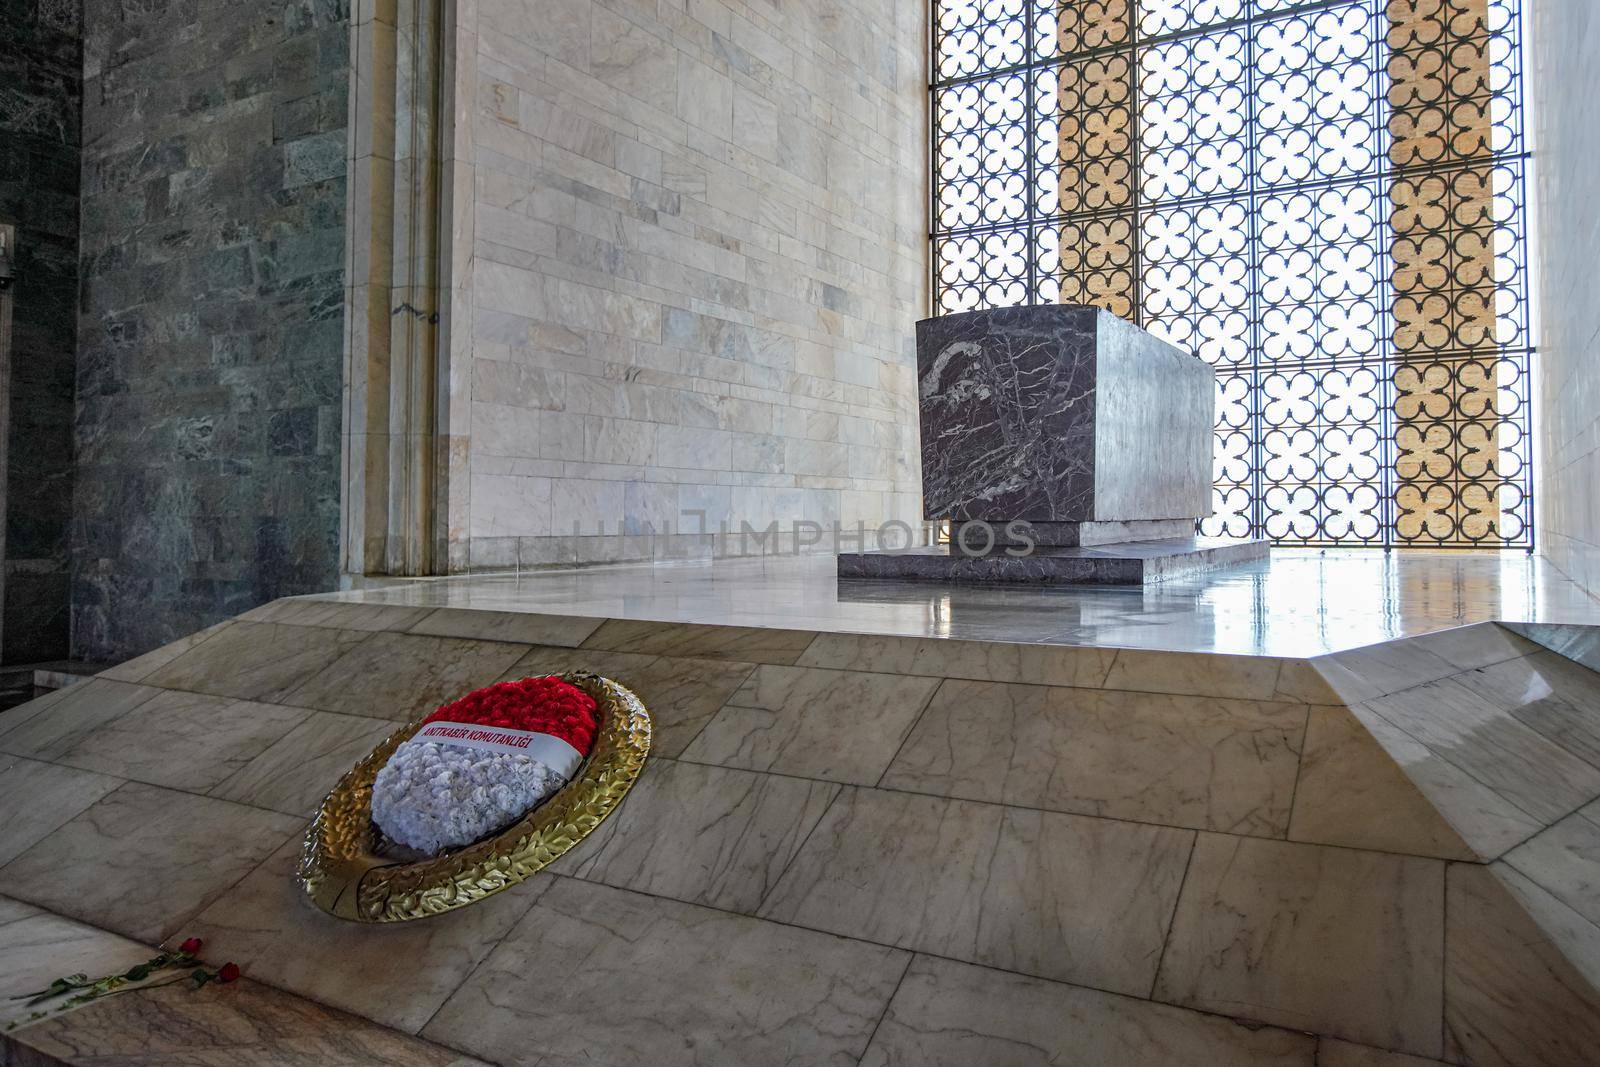 Anitkabir mausoleum of Mustafa Kemal Ataturk in Ankara, Turkiye by EvrenKalinbacak